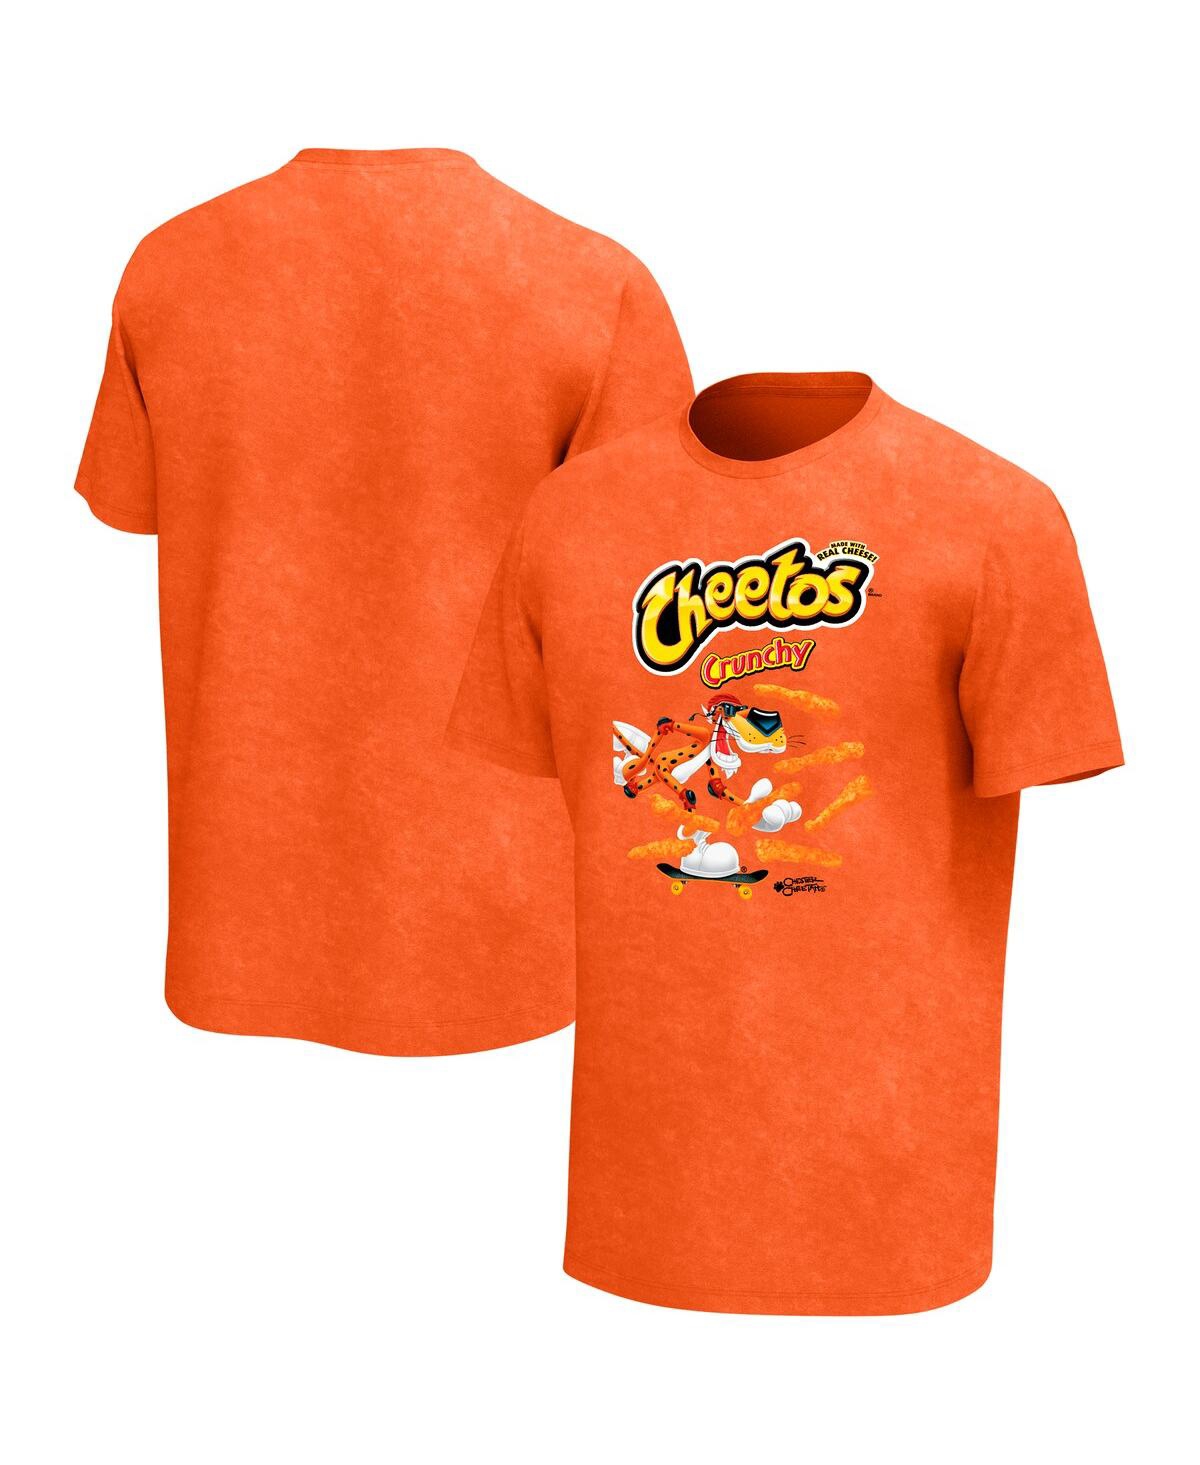 Men's Orange Cheetos Crunchy Washed T-shirt - Orange